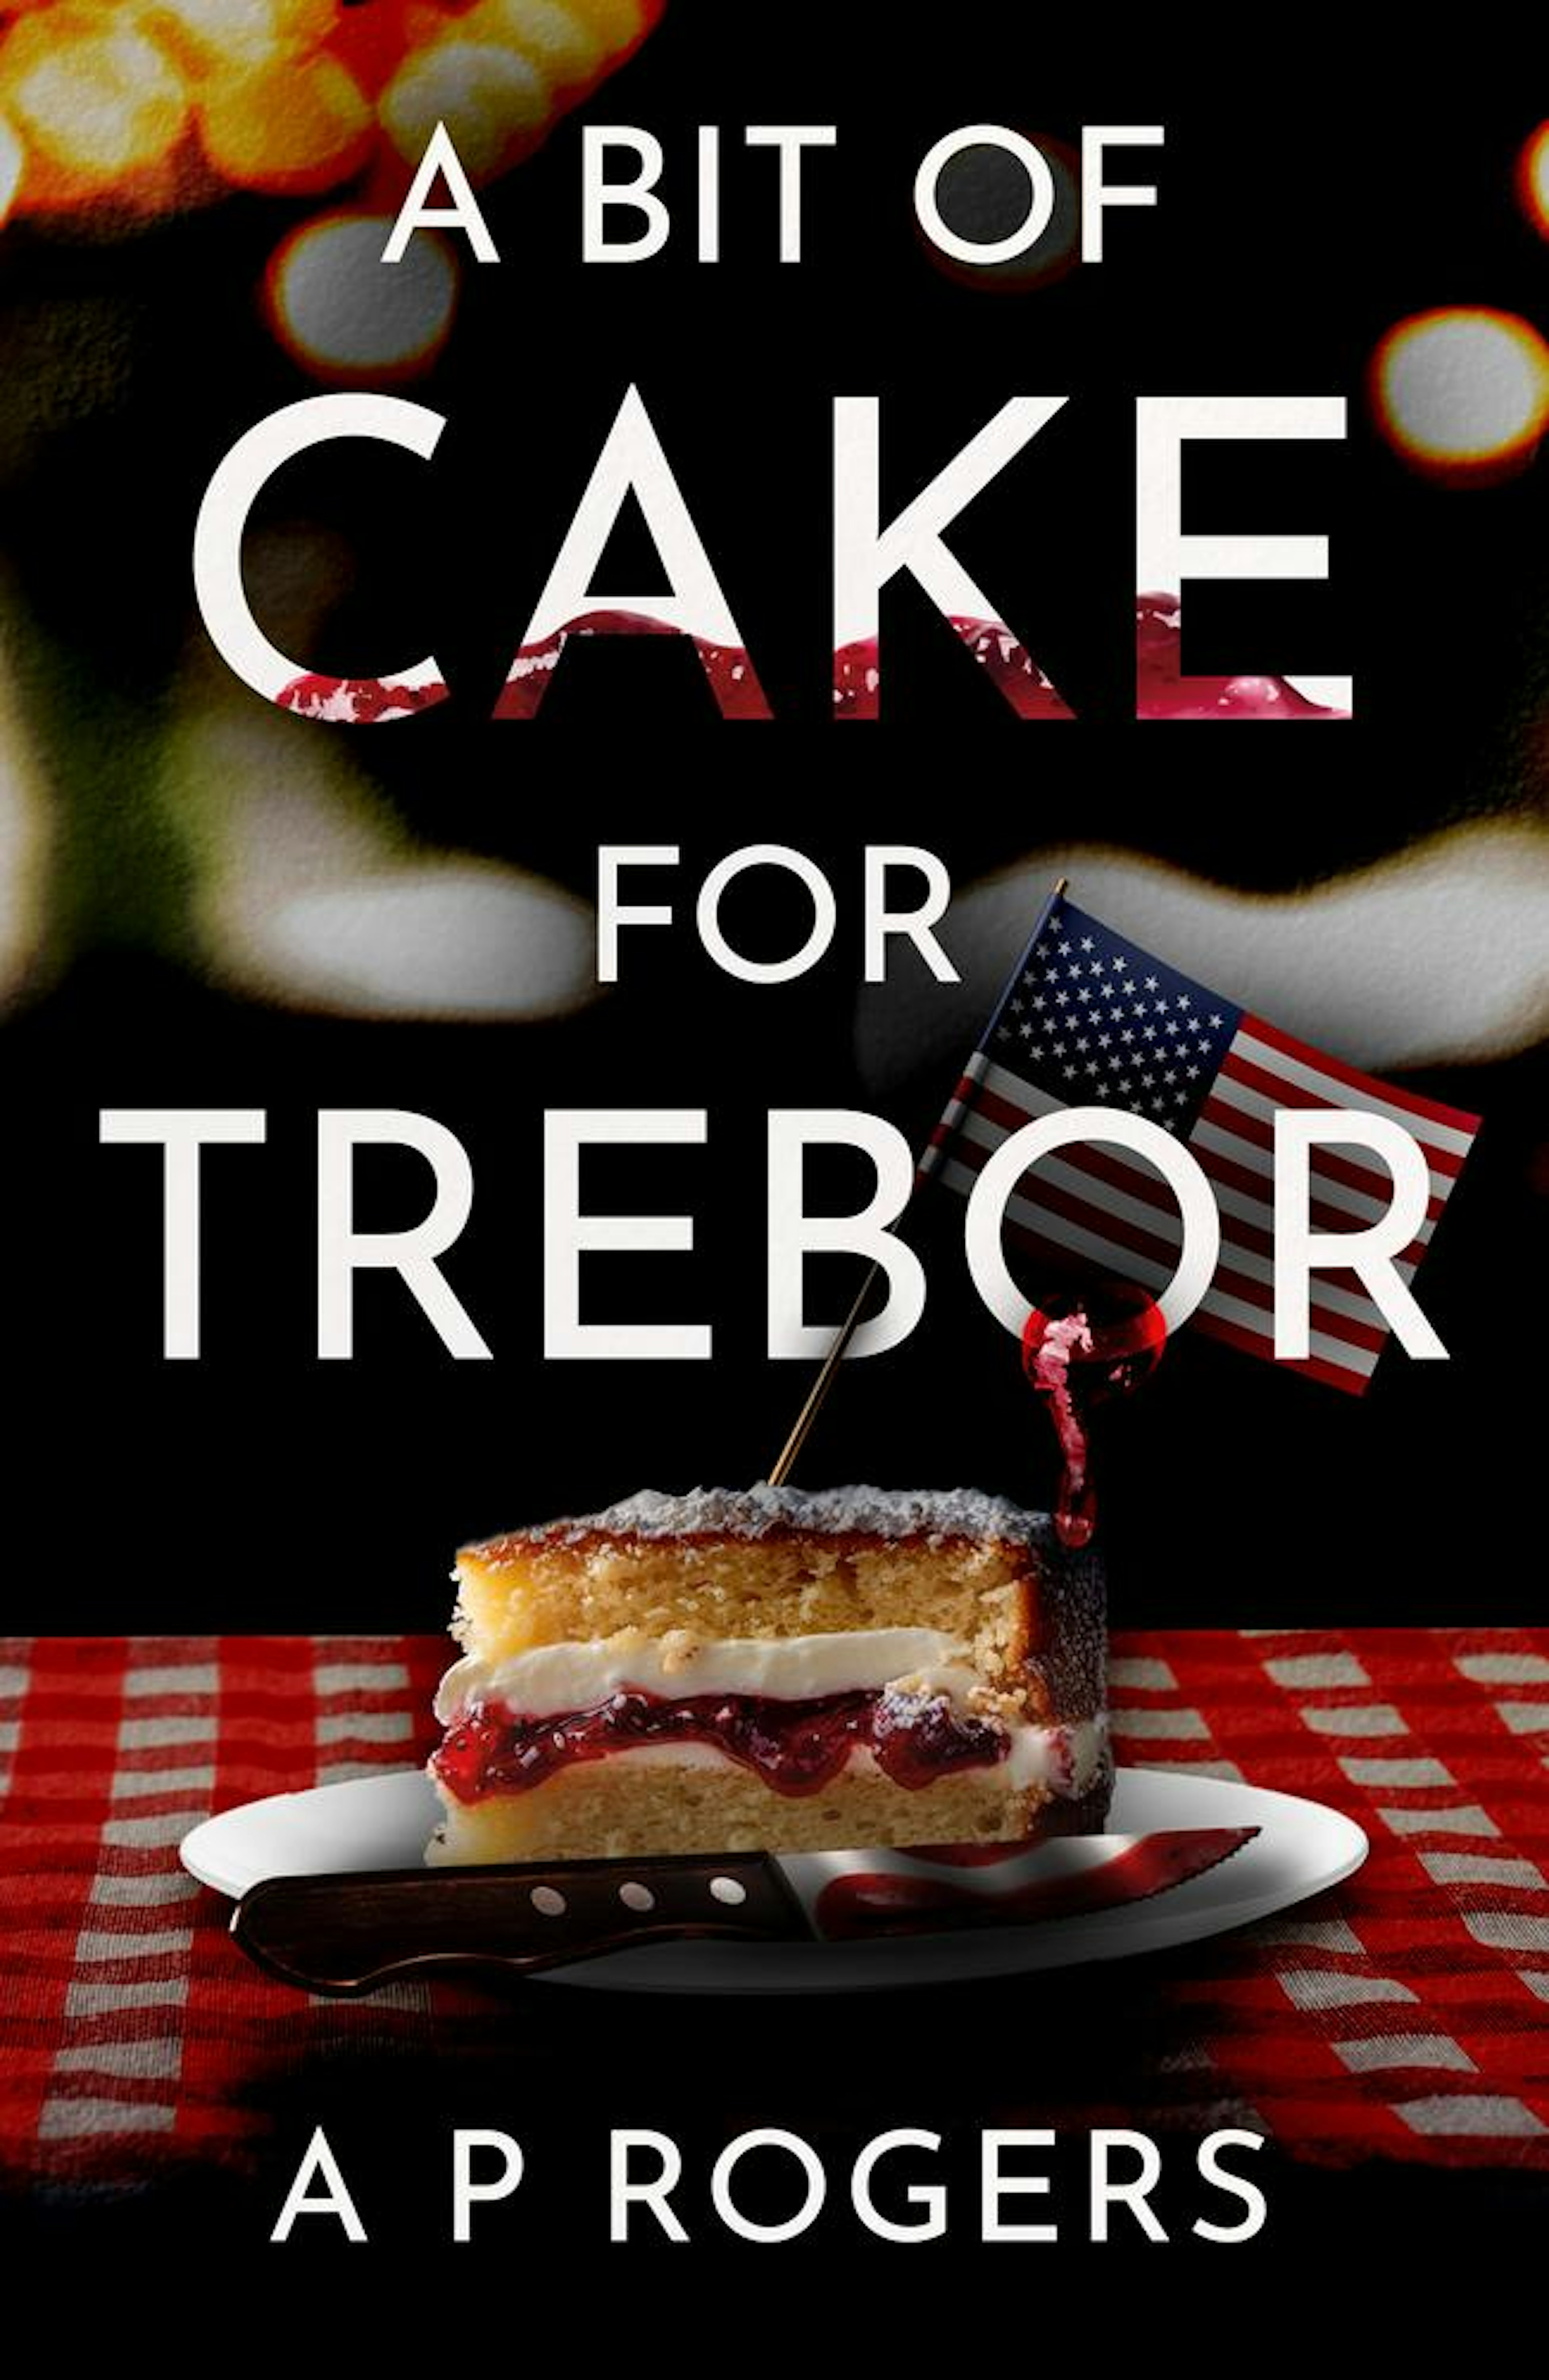 A Bit of Cake for Trebor